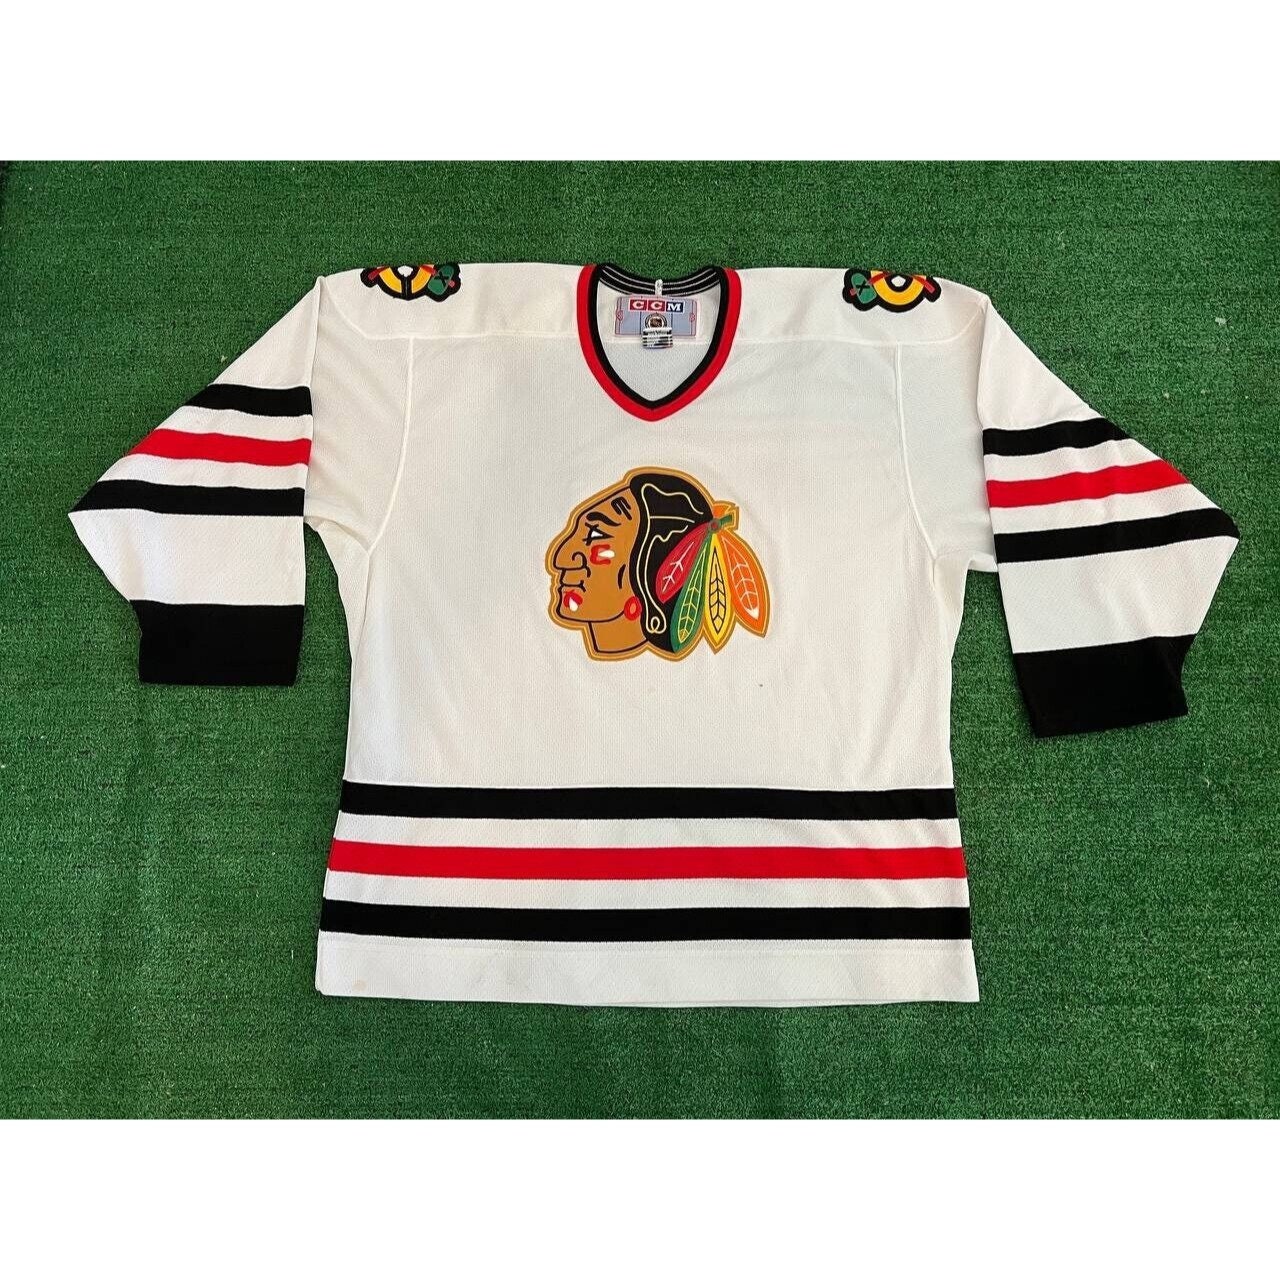 NHL Reebok CCM Chicago Blackhawks Patrick Kane #88 Size 48 Hockey Jersey,  Red